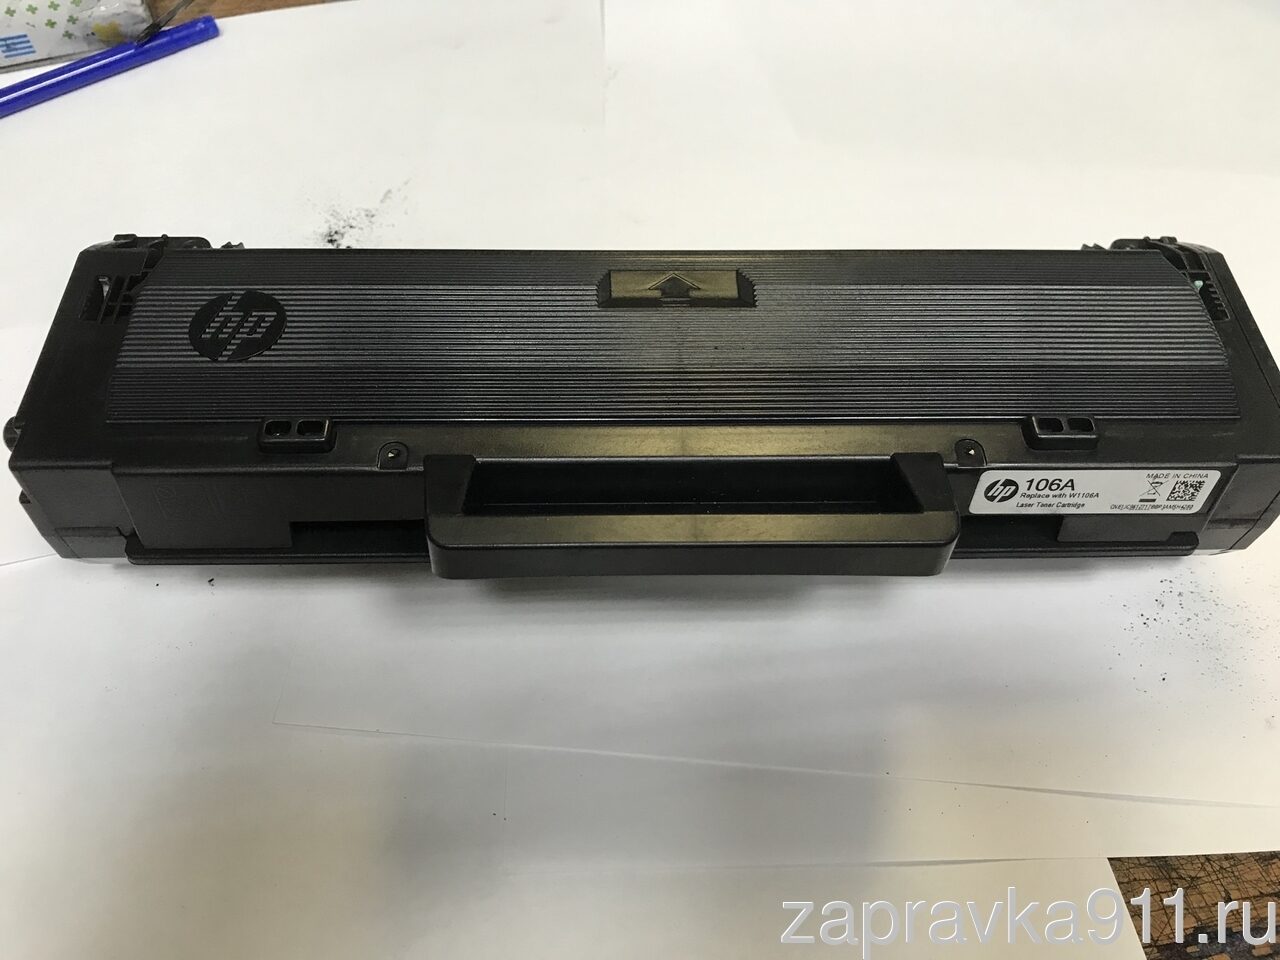 Инструкция по заправке HP Color LaserJet CP1215, CP1515n, CP1518ni, CM1312, CM1312nfi